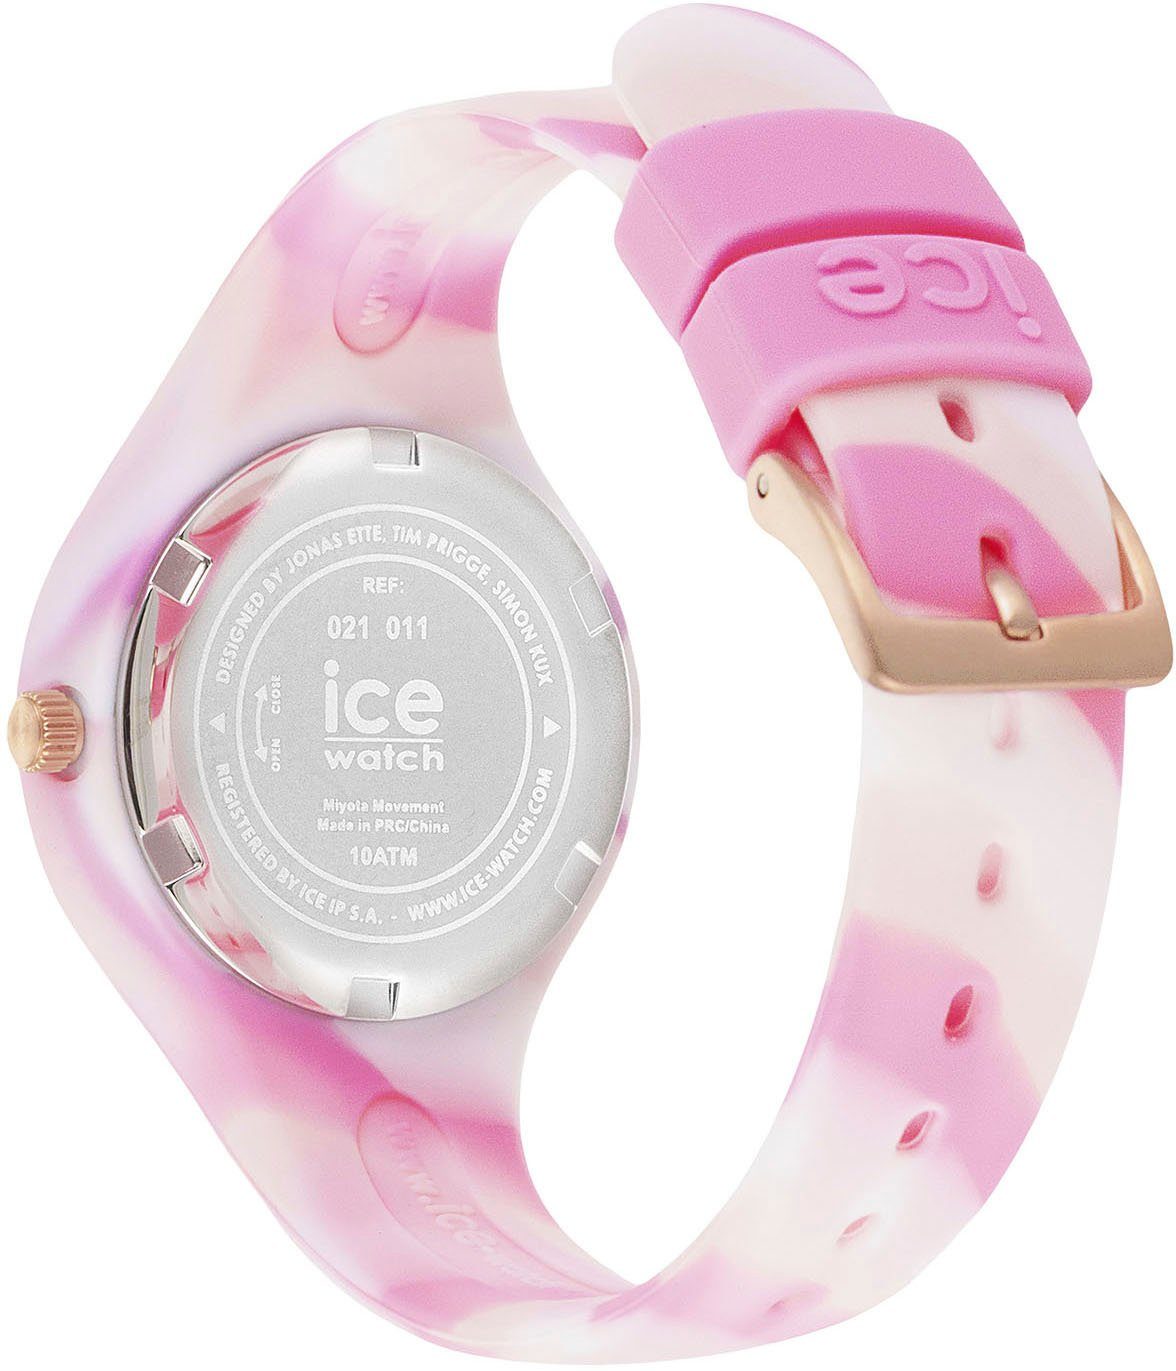 ideal auch als dye ICE Geschenk 021011, Pink and shades Extra-Small ice-watch - Quarzuhr tie 3H, - -